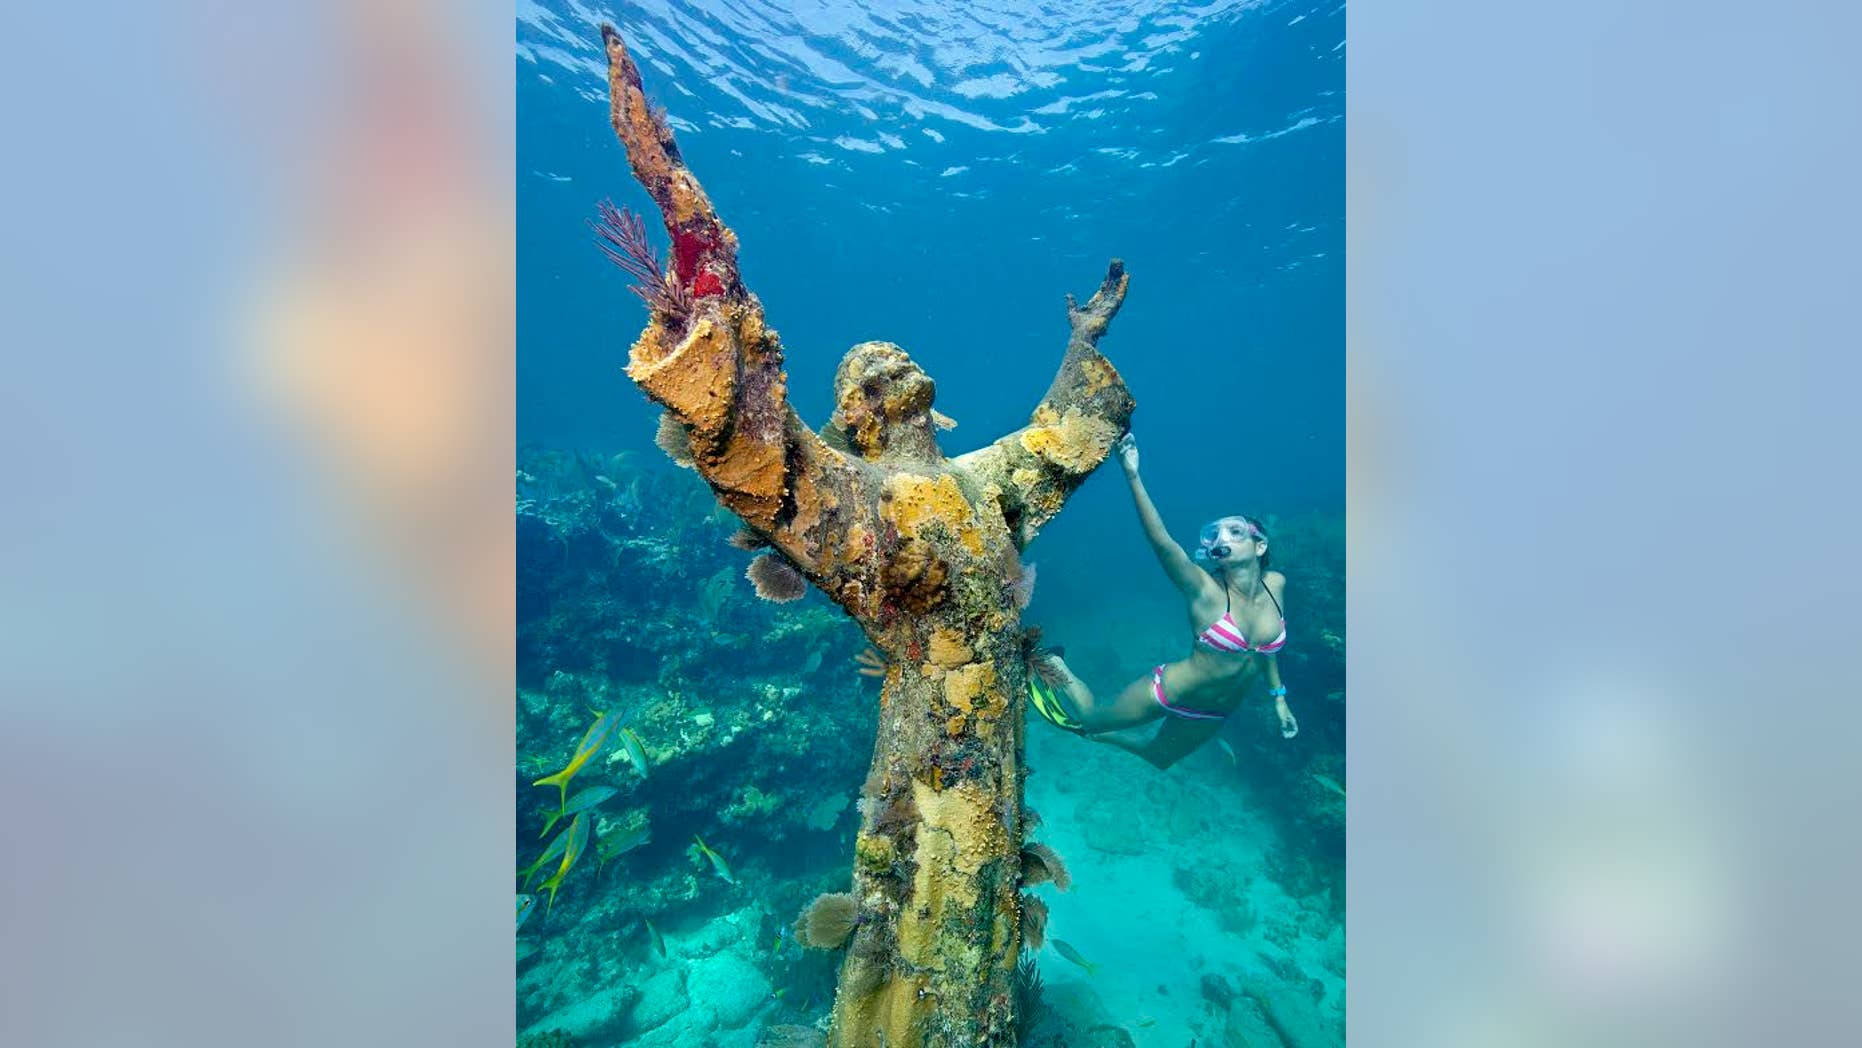 Florida Keys Underwater Jesus Statue Is Easter Snorkeling Destination 